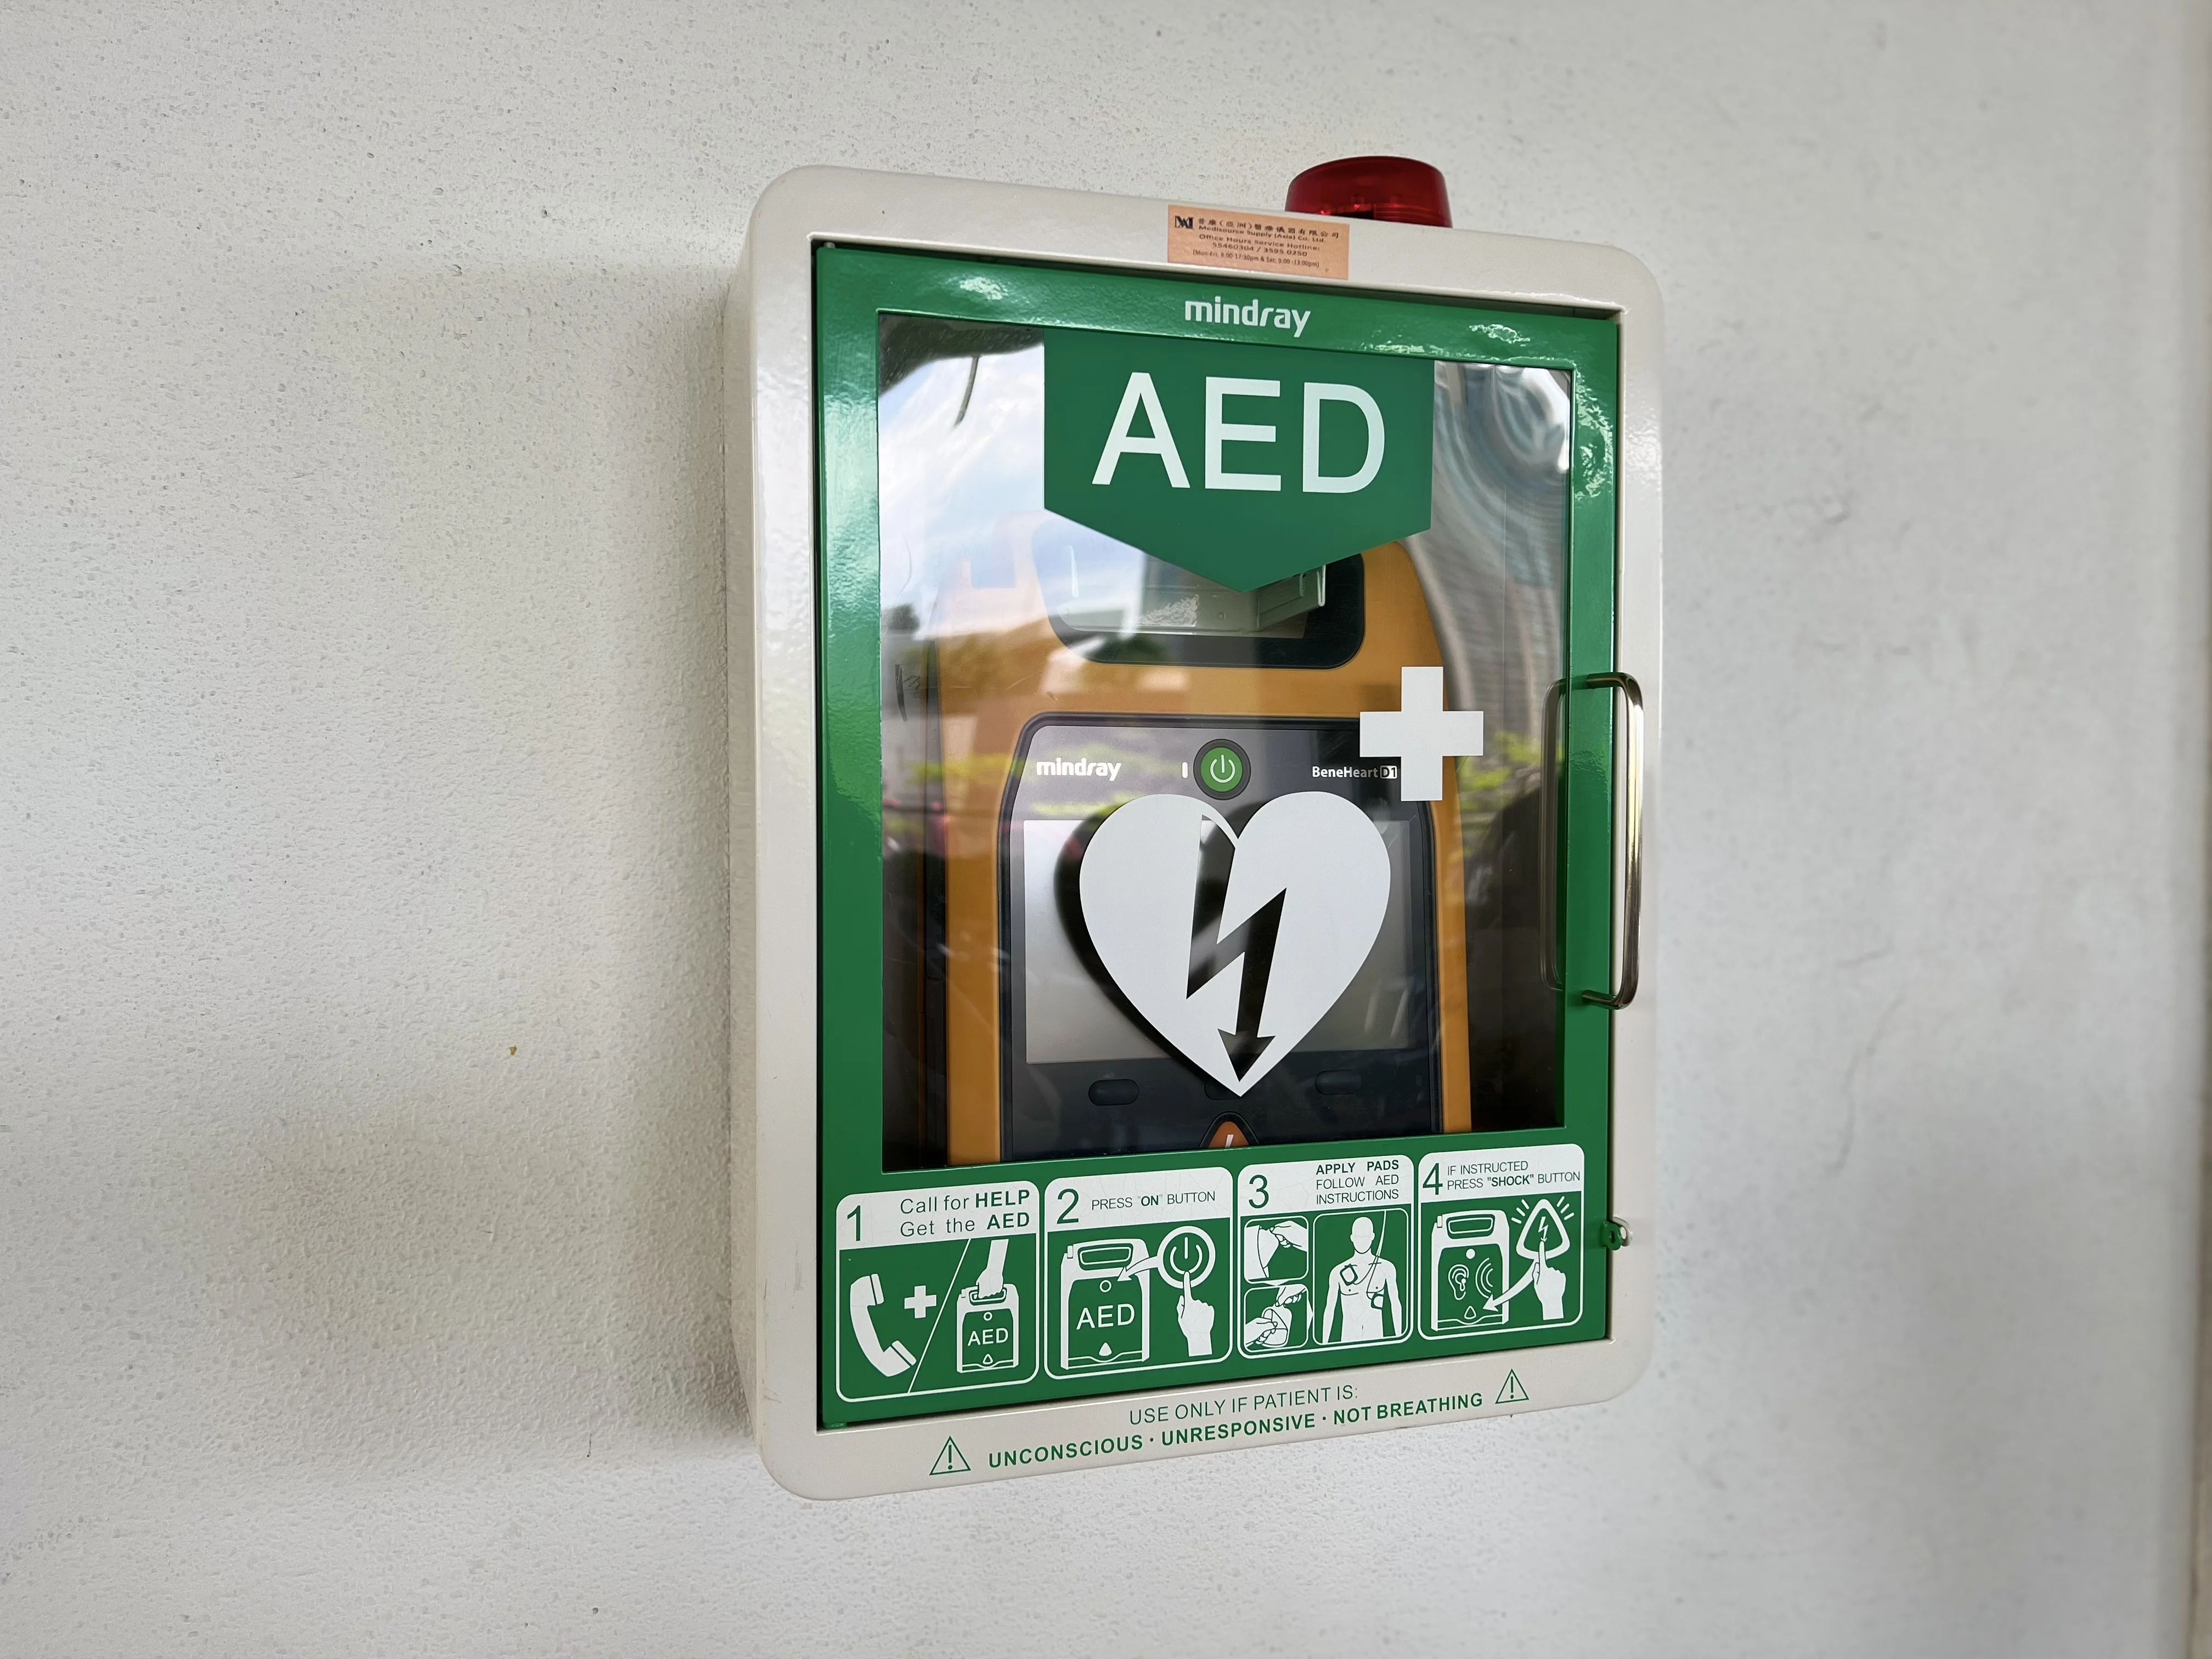 AED是自動體外心臟去纖維性顫動器，會透過電擊心臟，把心律回復正常。